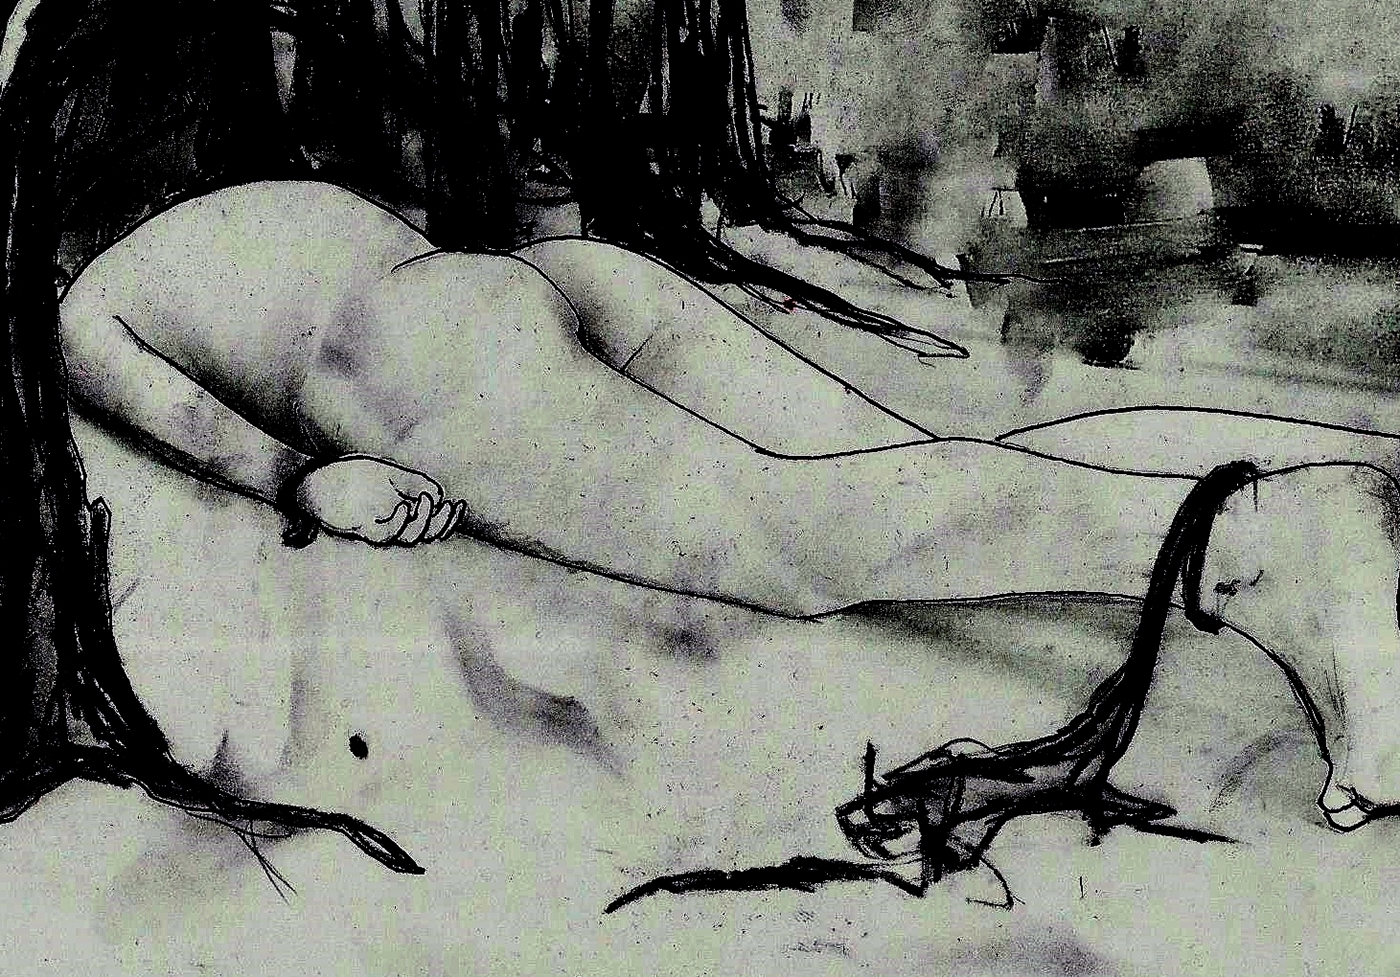 MRT olivia weiss woman Isolation darkness tied embeddet figurative painting gegenständliche malerei neue figurative kunst surreal